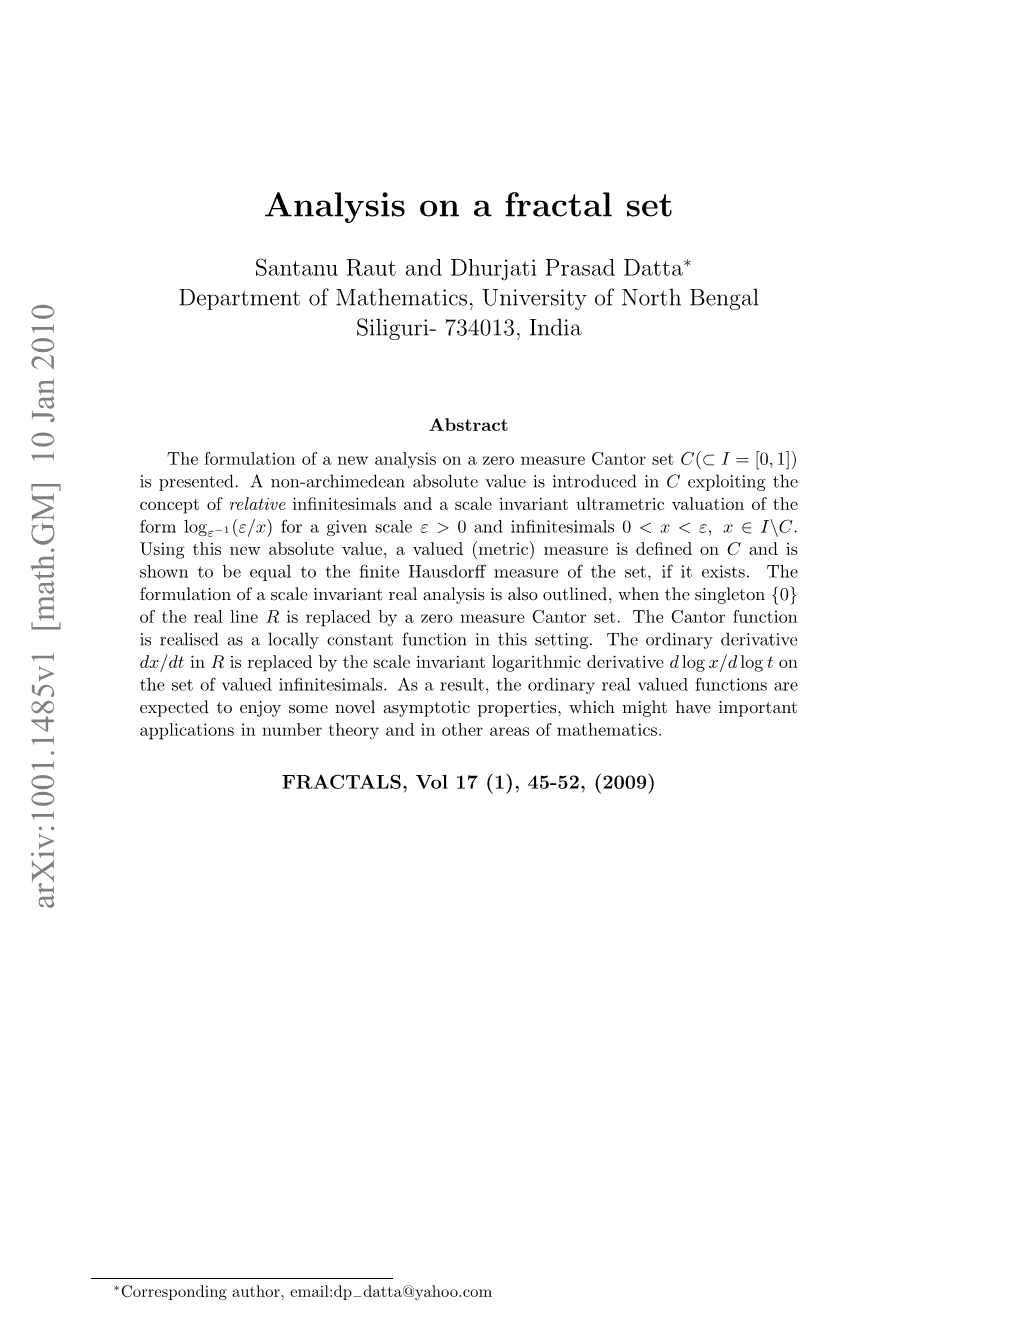 Analysis on a Fractal Set [1-3]